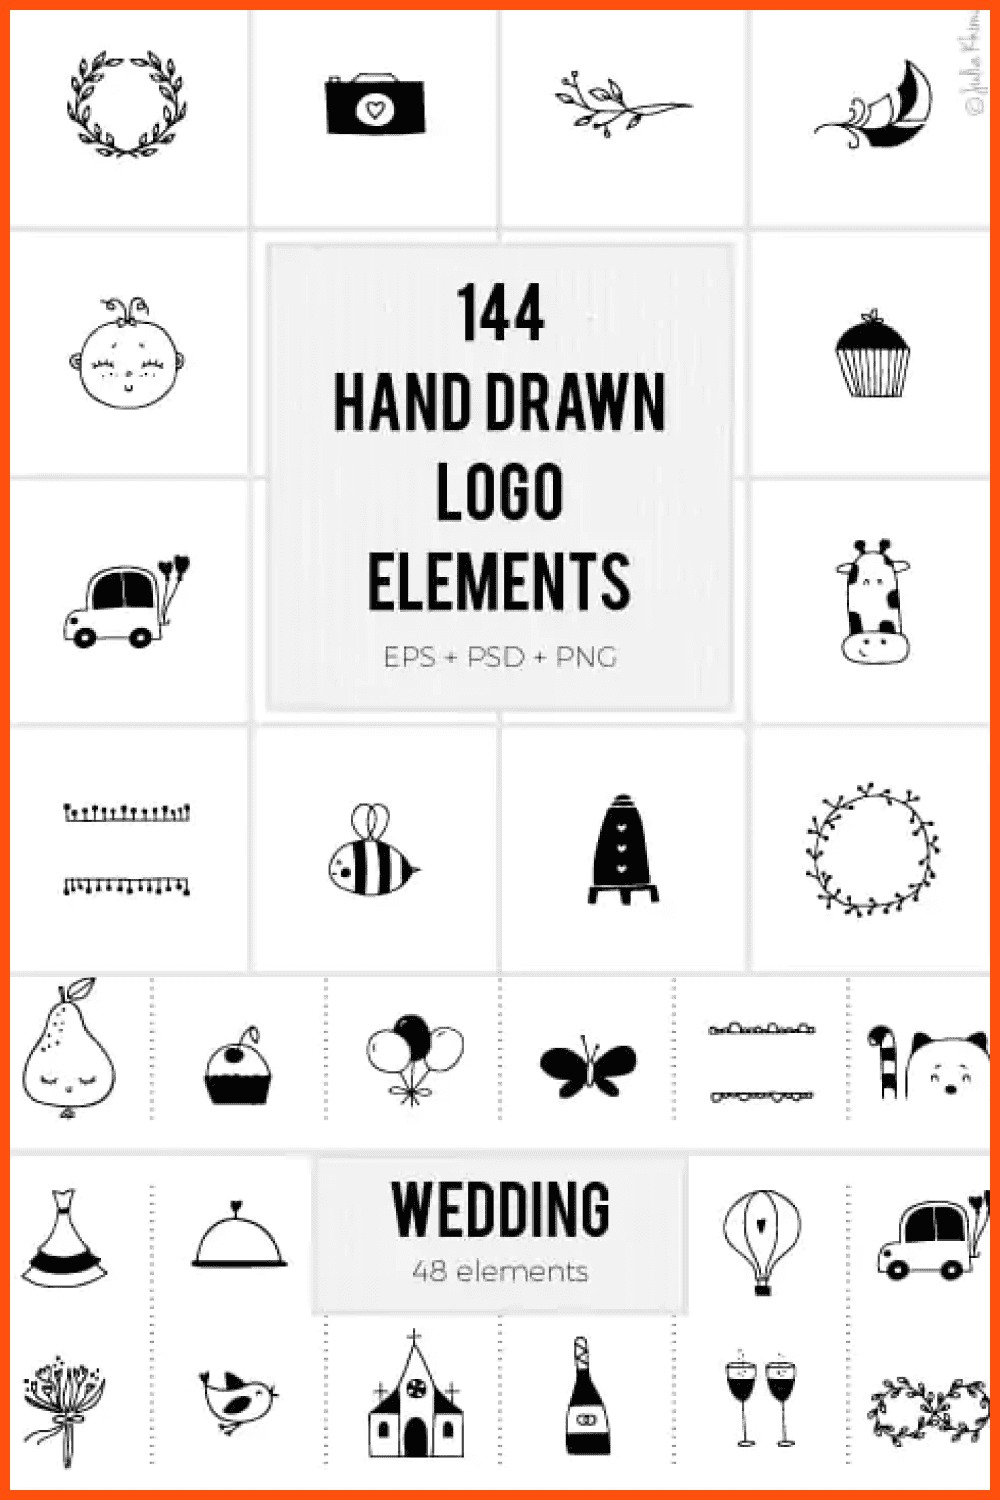 Hand-drawn logo elements.